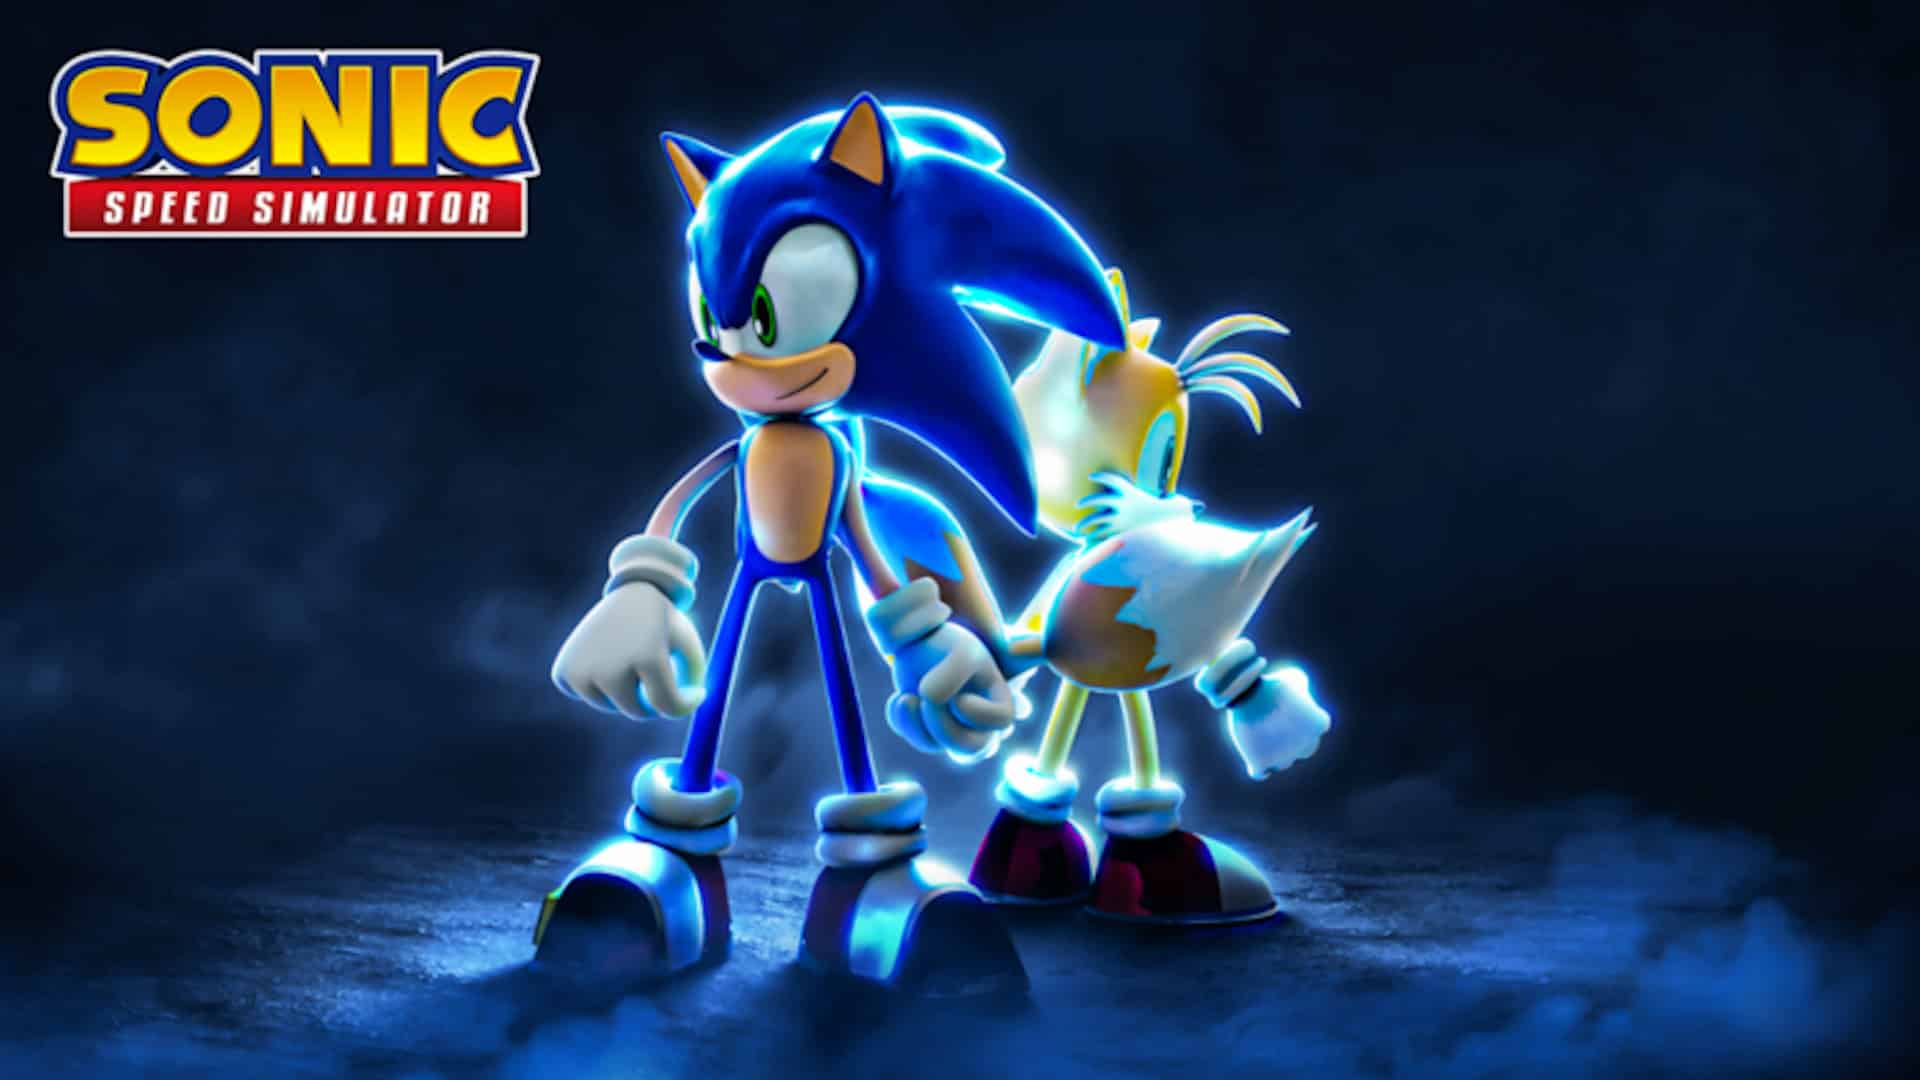 Sonic Speed Simulator Roblox game